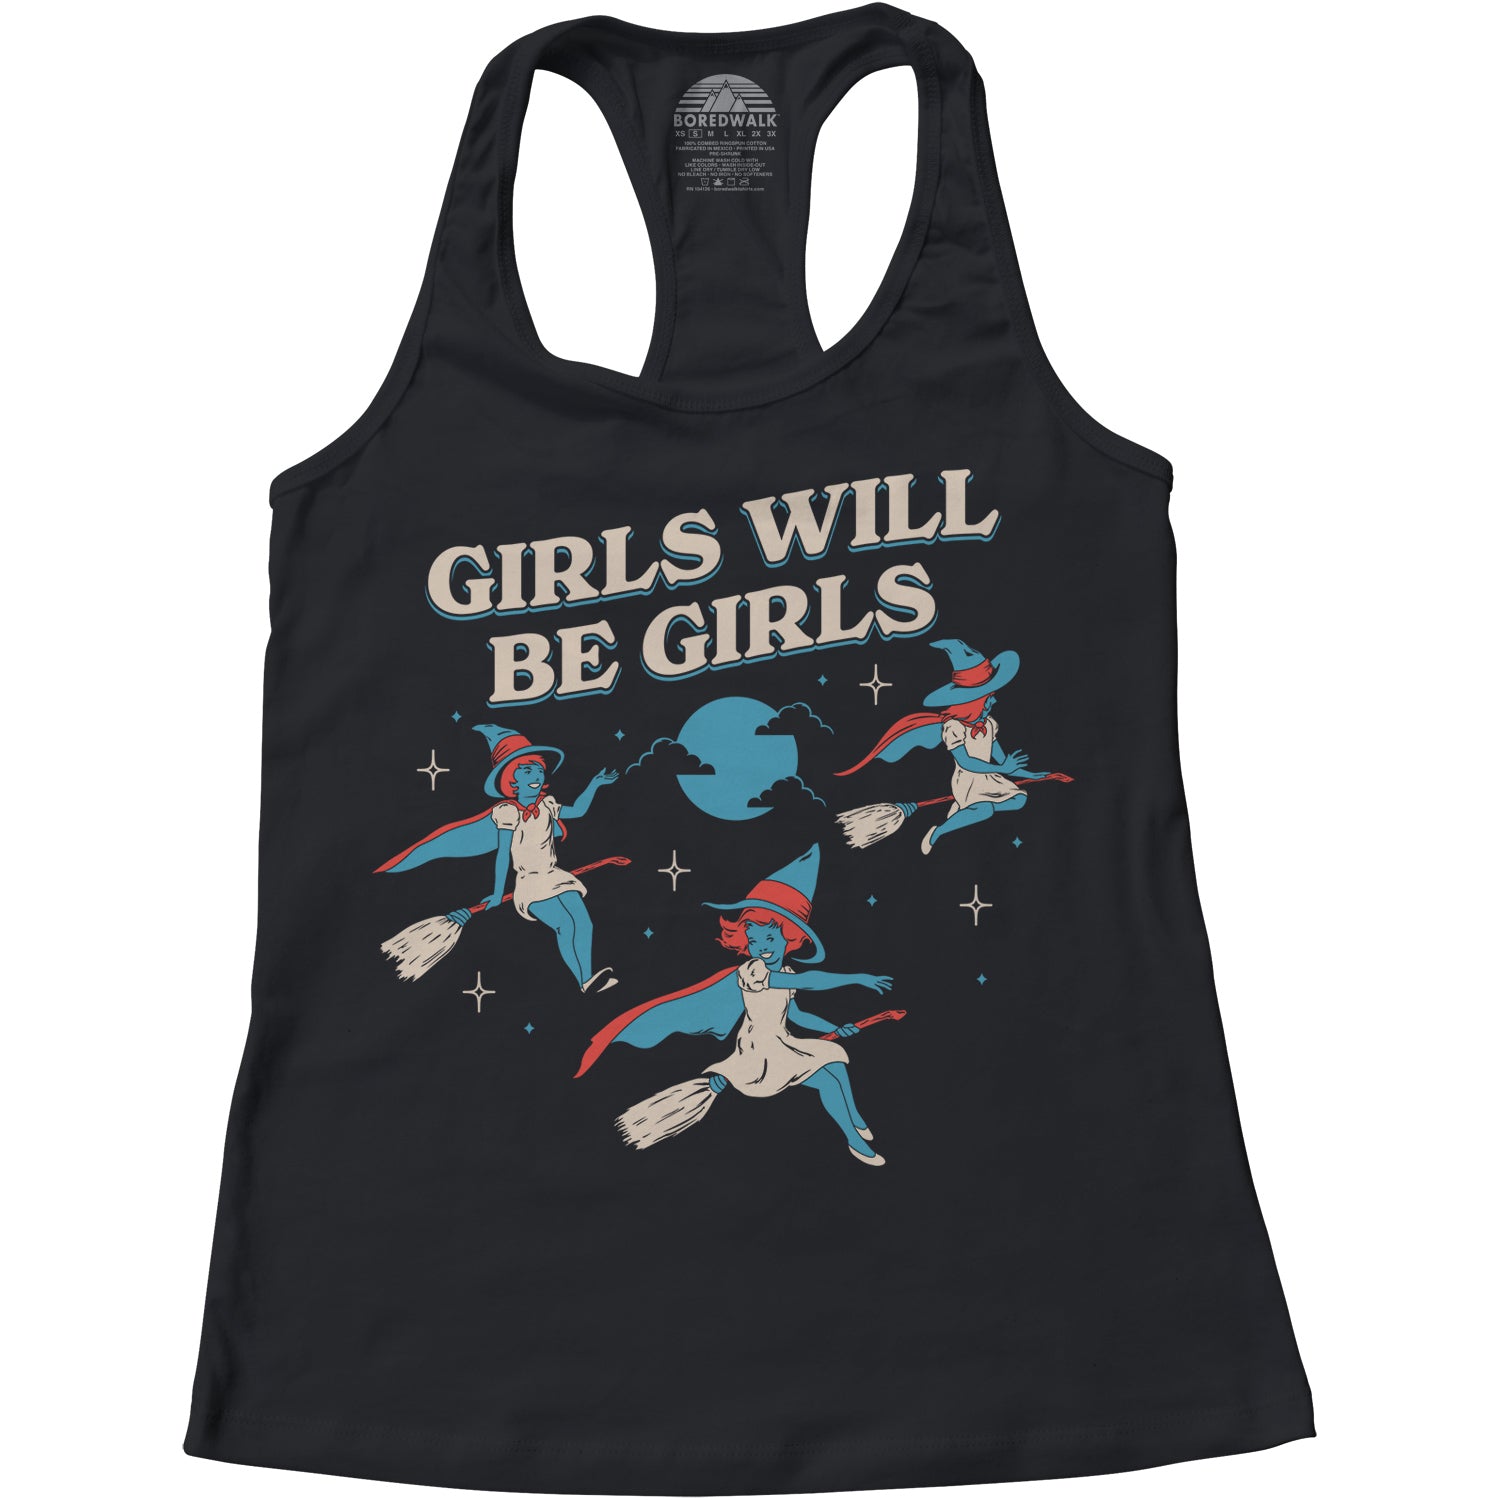 Women's Girls Will Be Girls Witch Racerback Tank Top